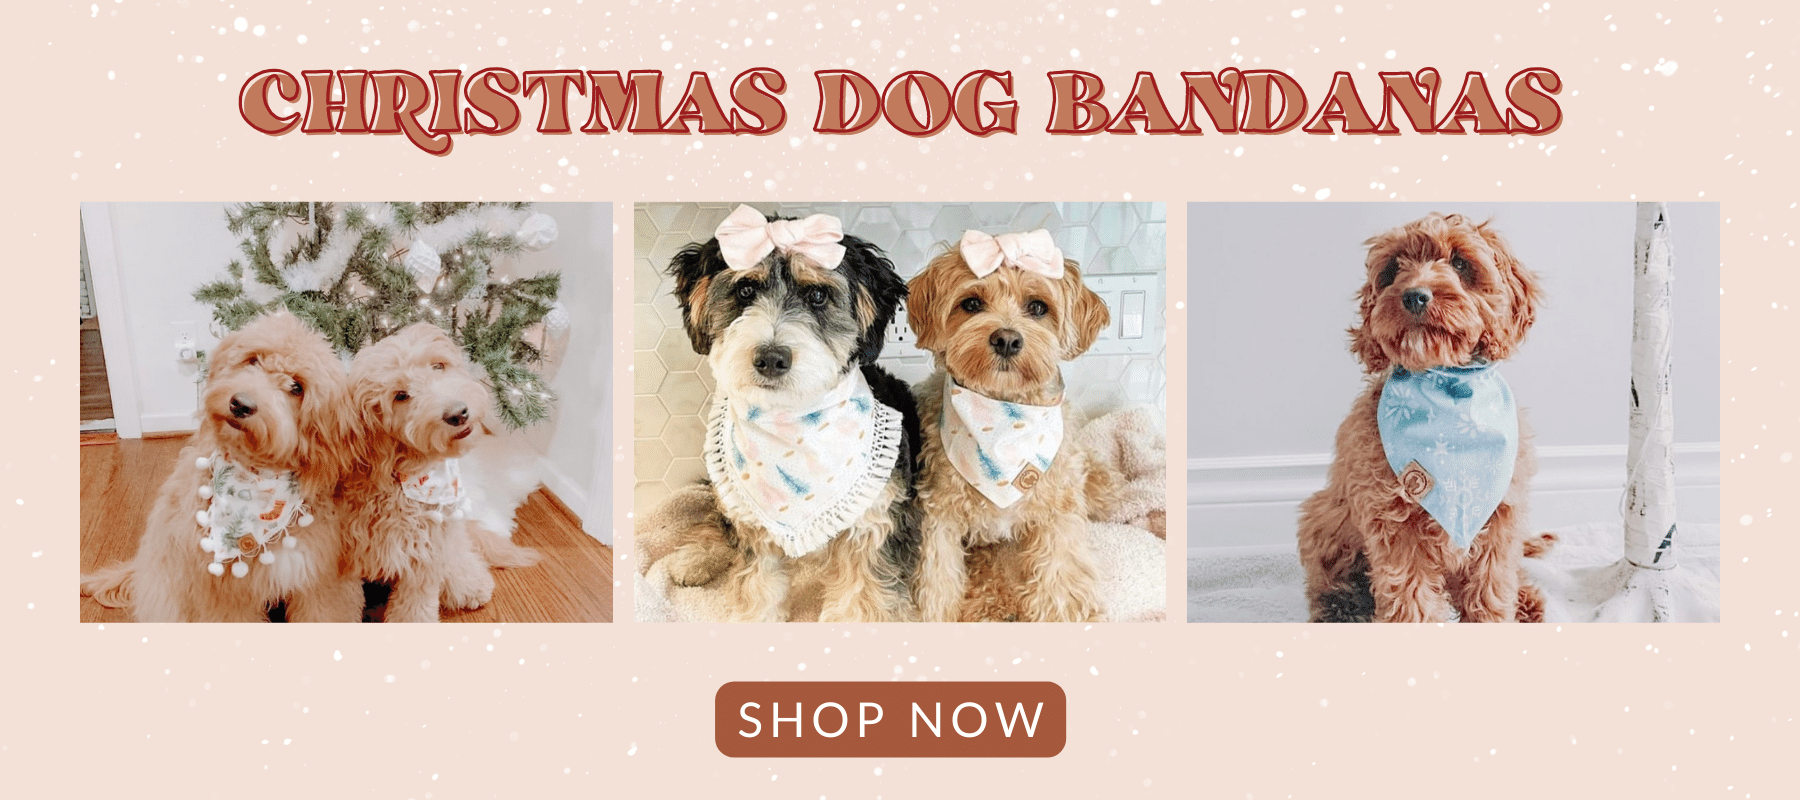 dogs wearings holiday dog bandanas